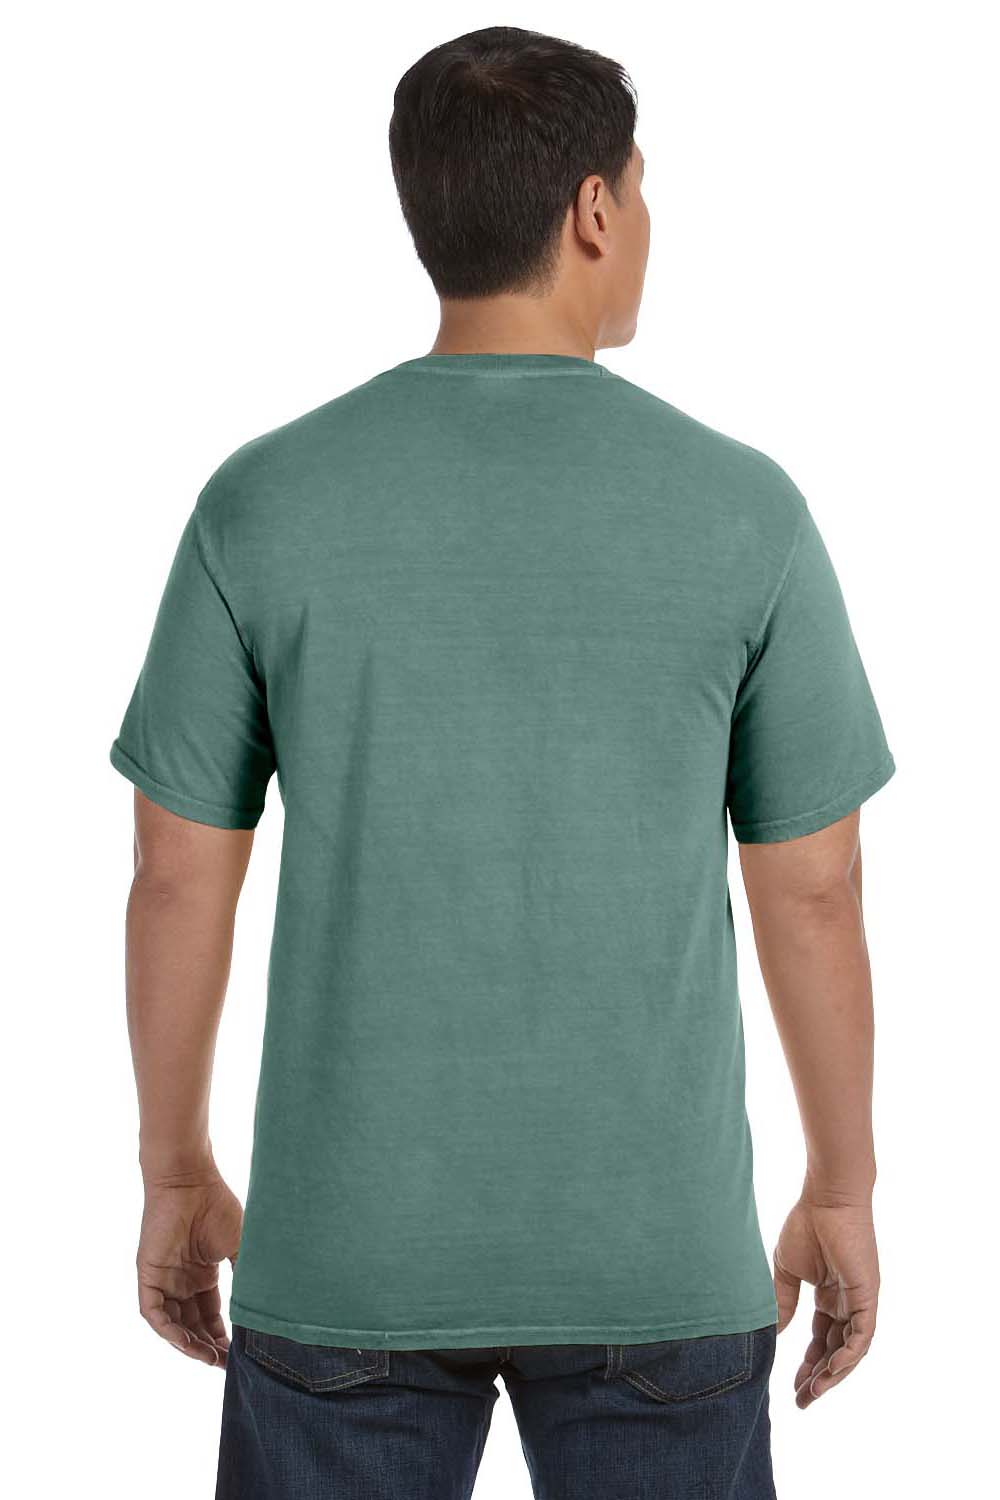 Comfort Colors C1717 Mens Short Sleeve Crewneck T-Shirt Light Green Back